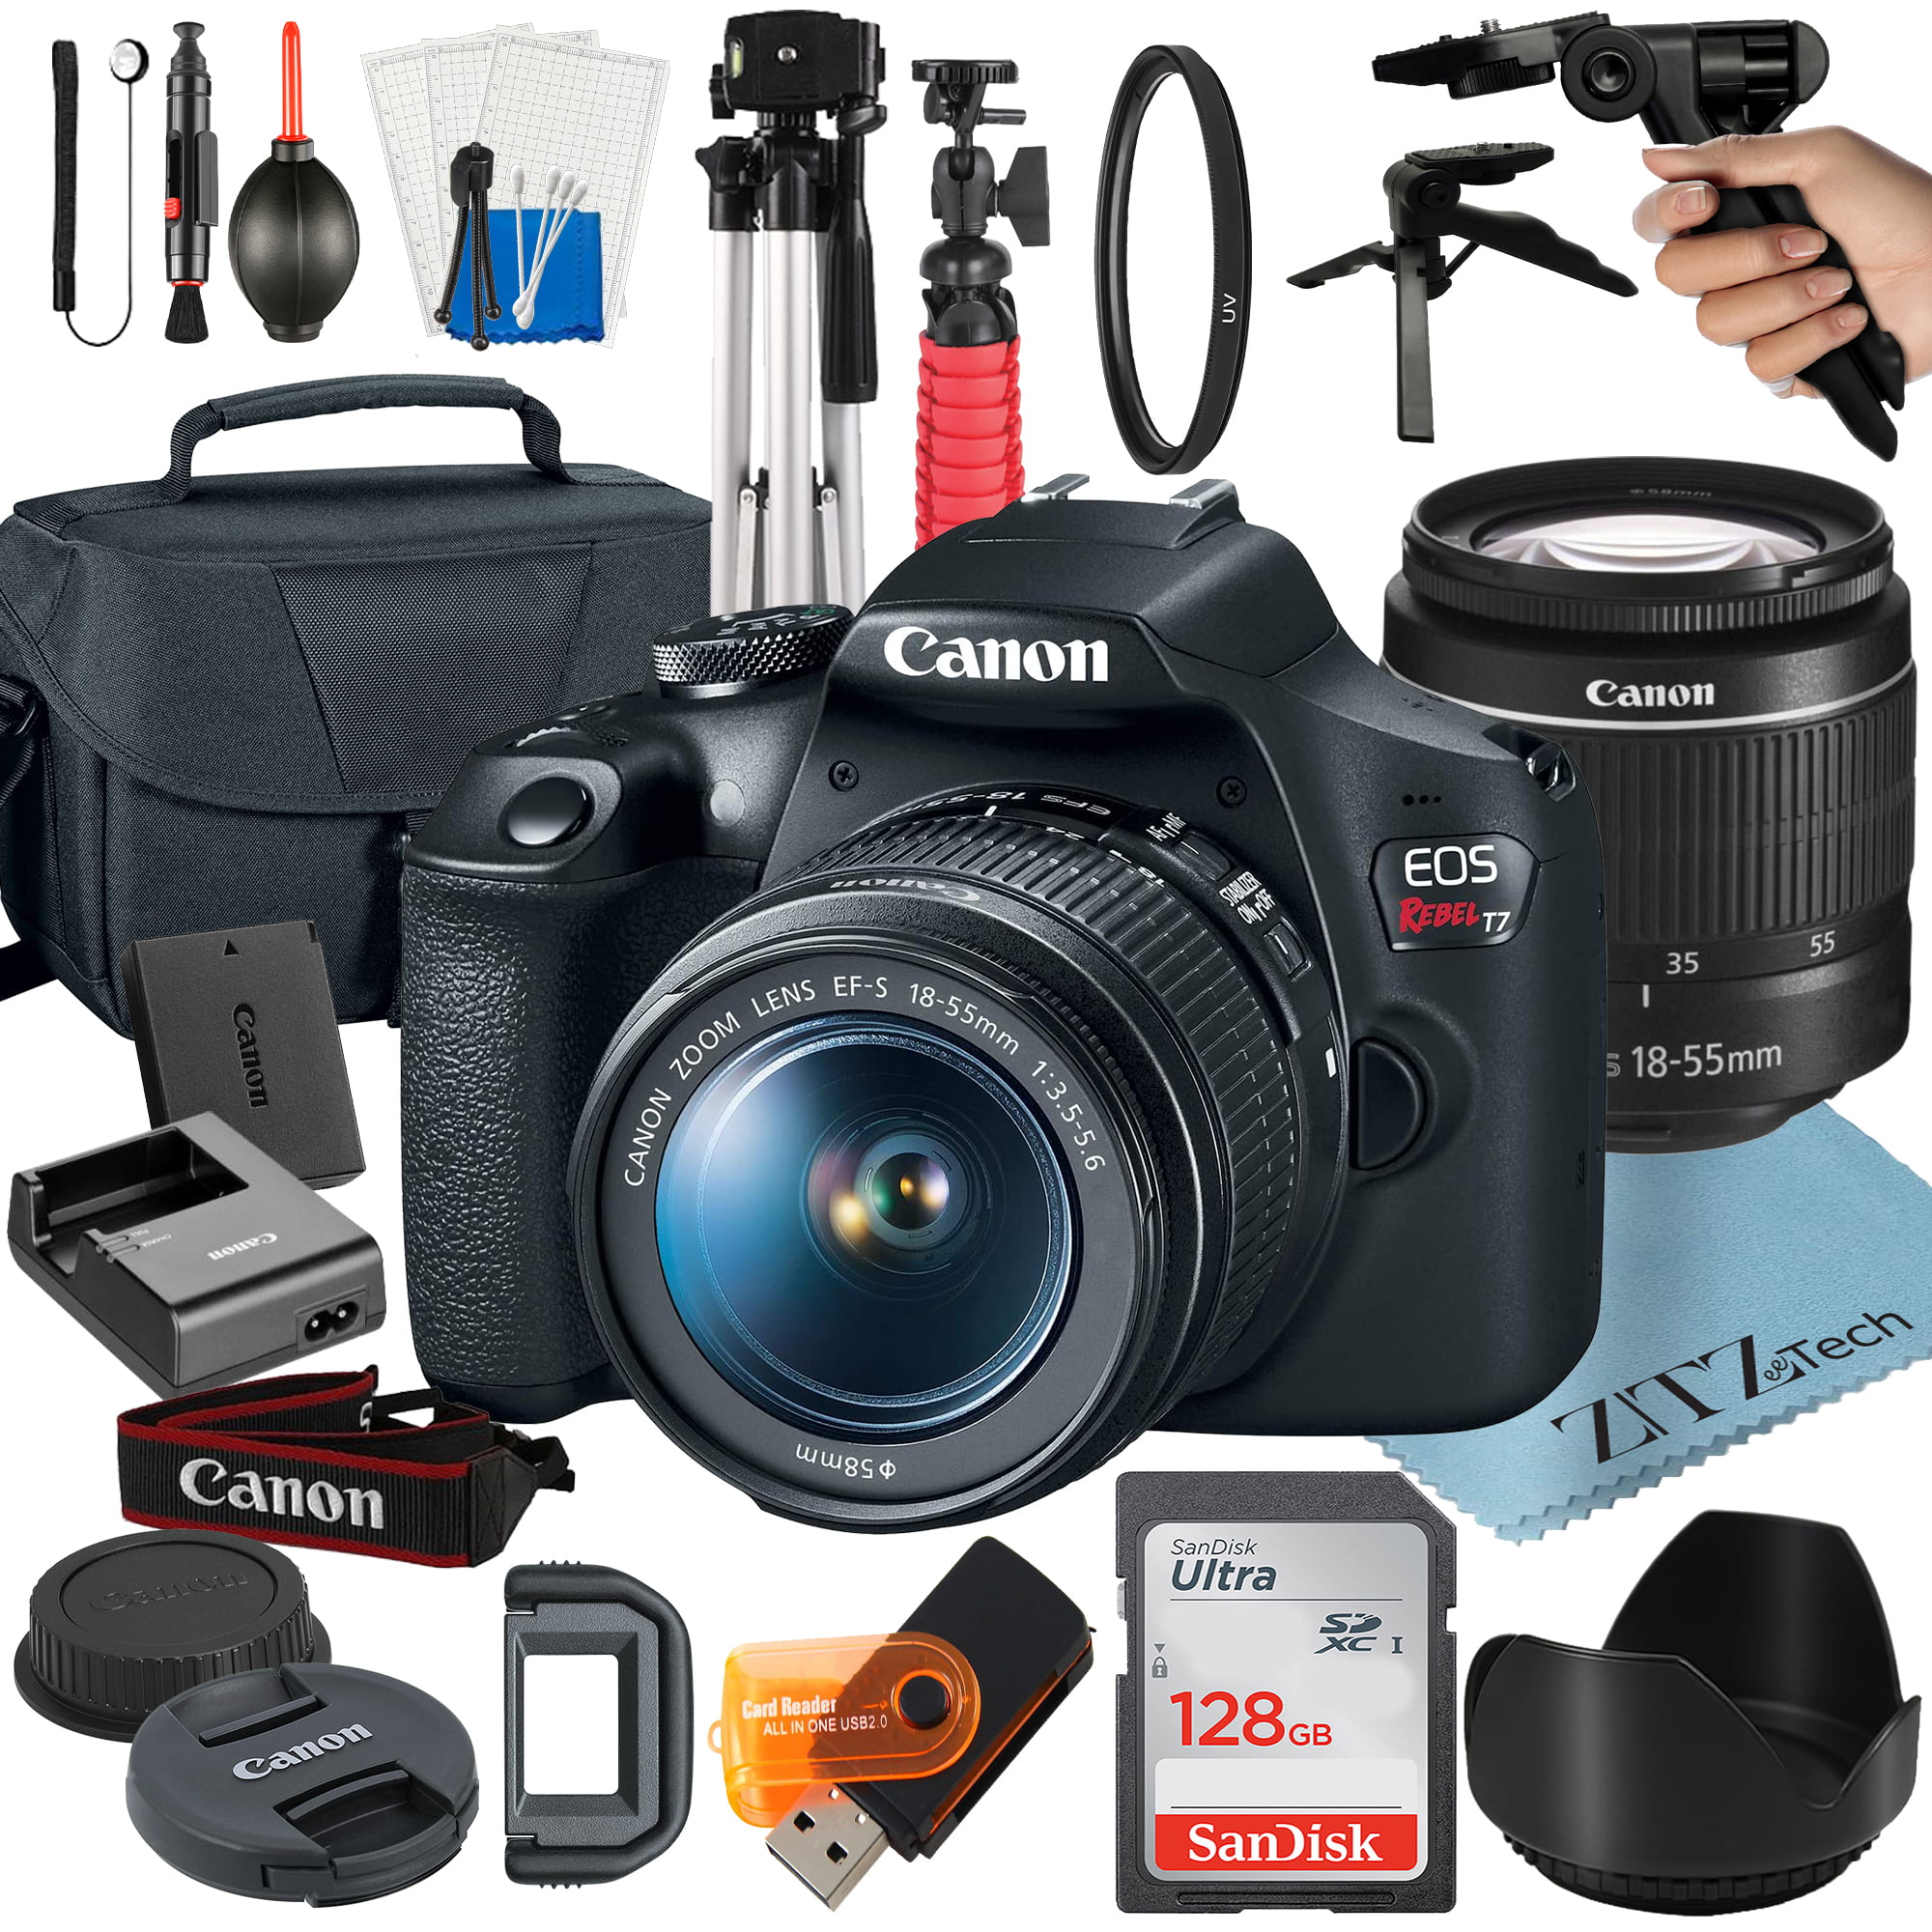 Canon EOS Rebel T7 DSLR Camera Bundle with 18-55mm Zoom Lens + 128GB SanDisk Card + Case + Tripod + ZeeTech Accessory